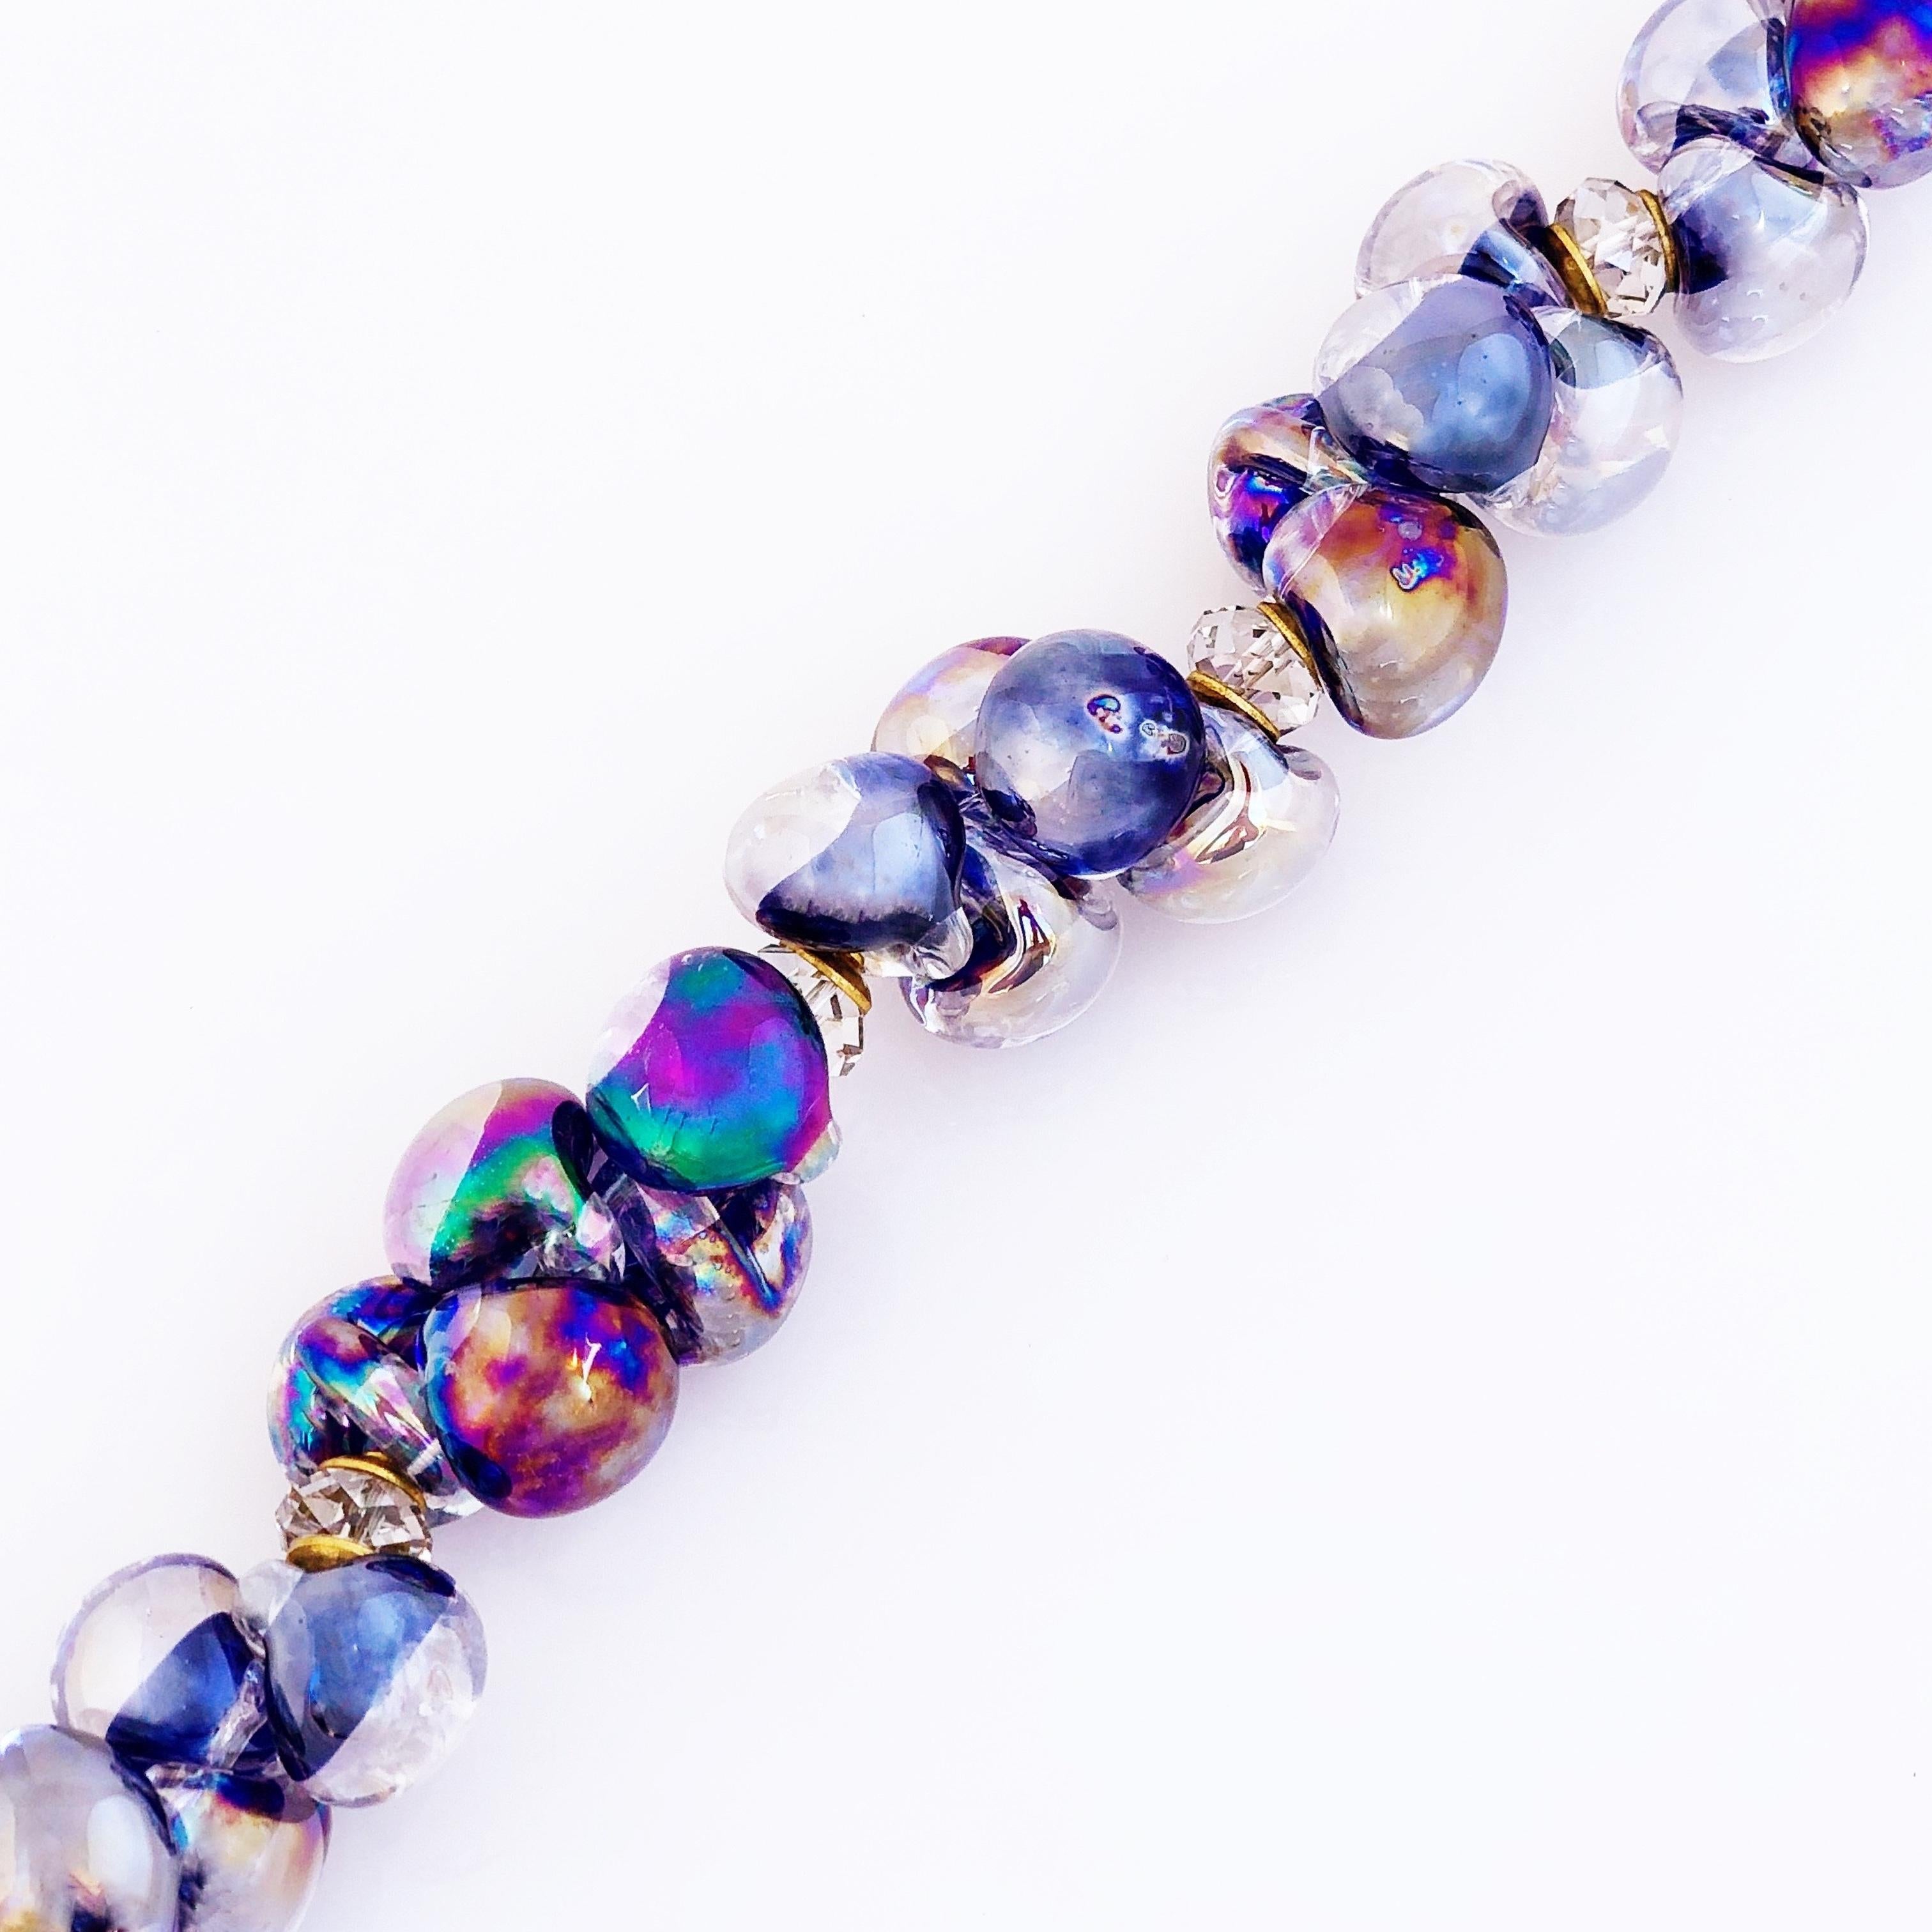 Öllick-Kunstglas-Perlen-Statement-Halskette, 1980er Jahre (Moderne) im Angebot